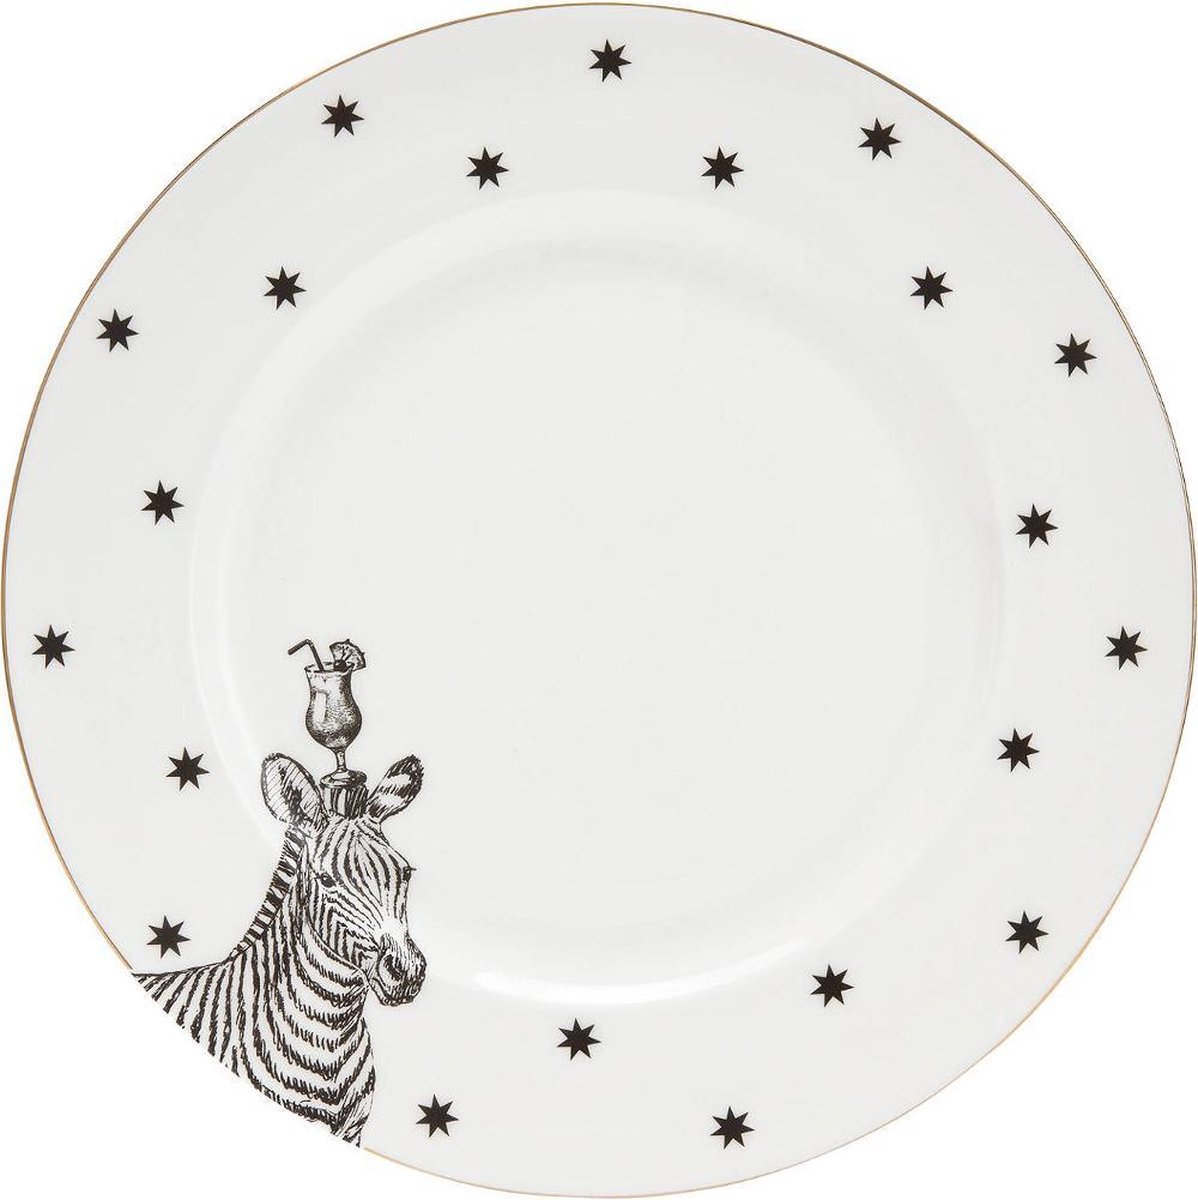 Yvonne Ellen London Monochrome Set/2 Diner borden Ø 26,5 cm - Zebra Print - Bone China Porselein - zwart/wit servies